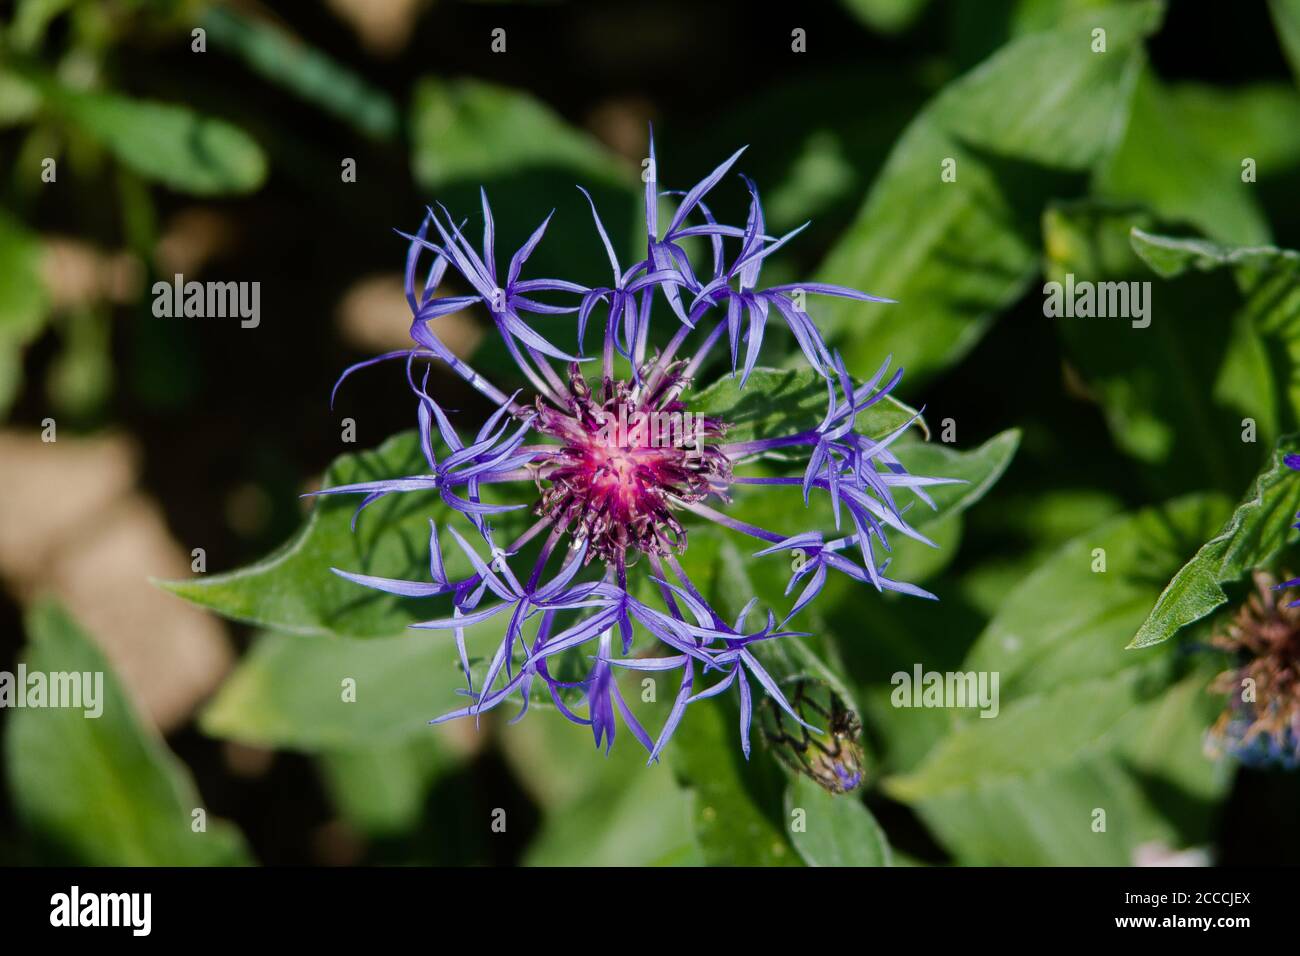 Perennial cornflower - mountain knapweed - Centaurea Montana in a beautiful combination of blue and purple flower parts. Stock Photo